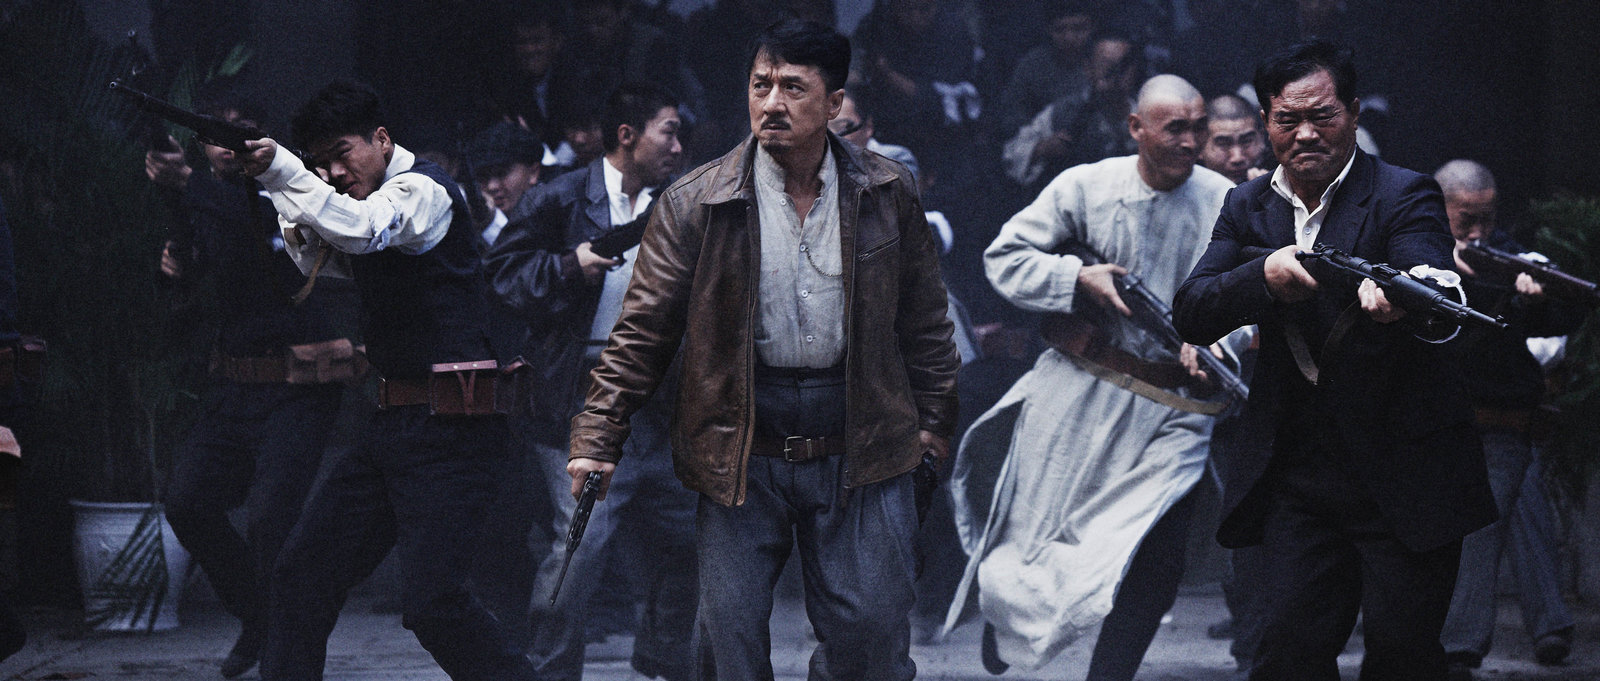 Jackie Chan - 1911 Revolution